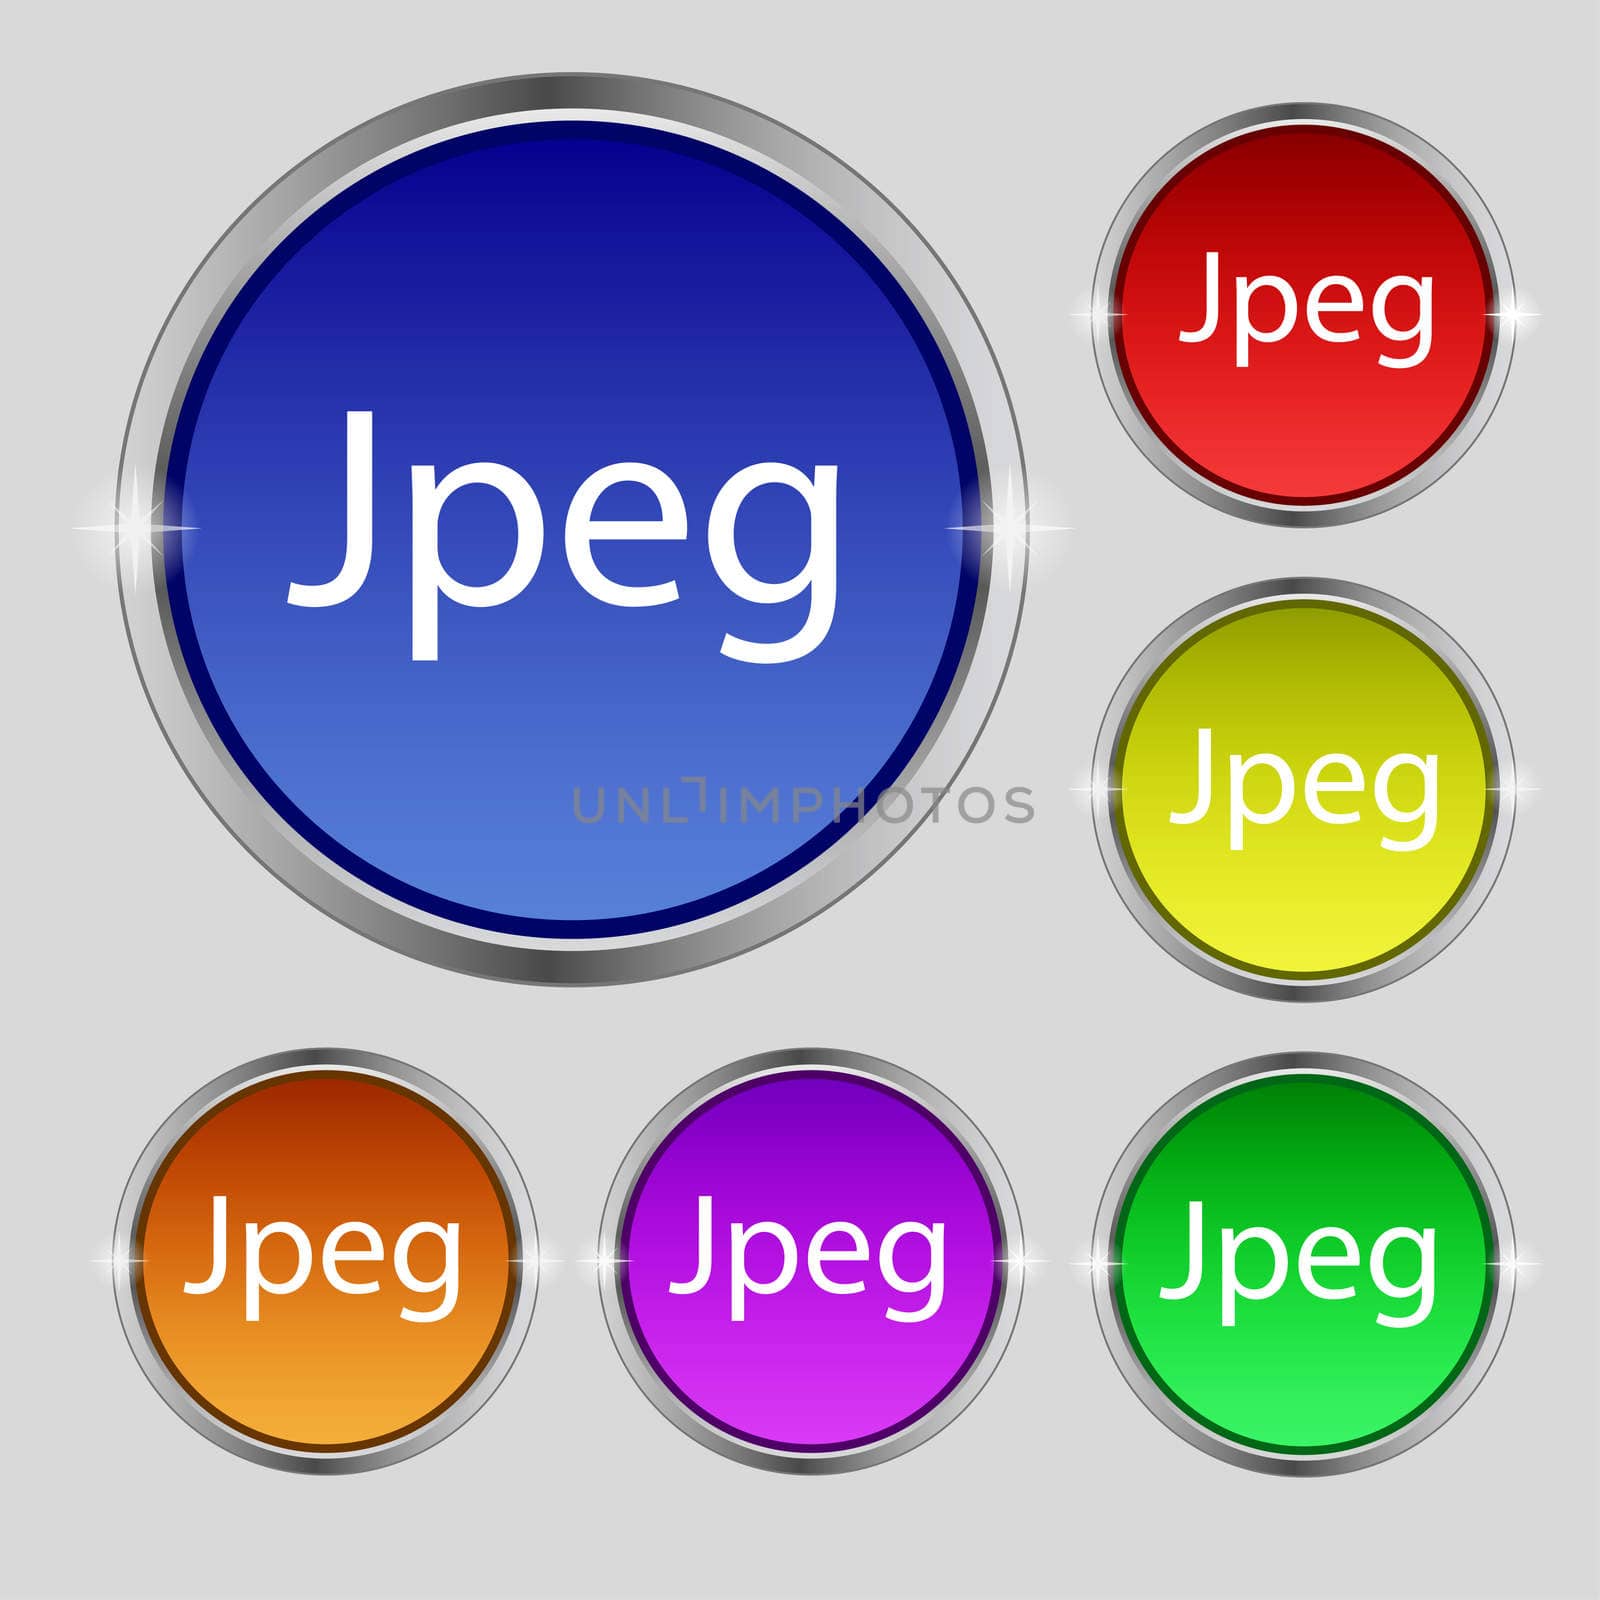 File JPG sign icon. Download image file symbol. Set of colored buttons. illustration